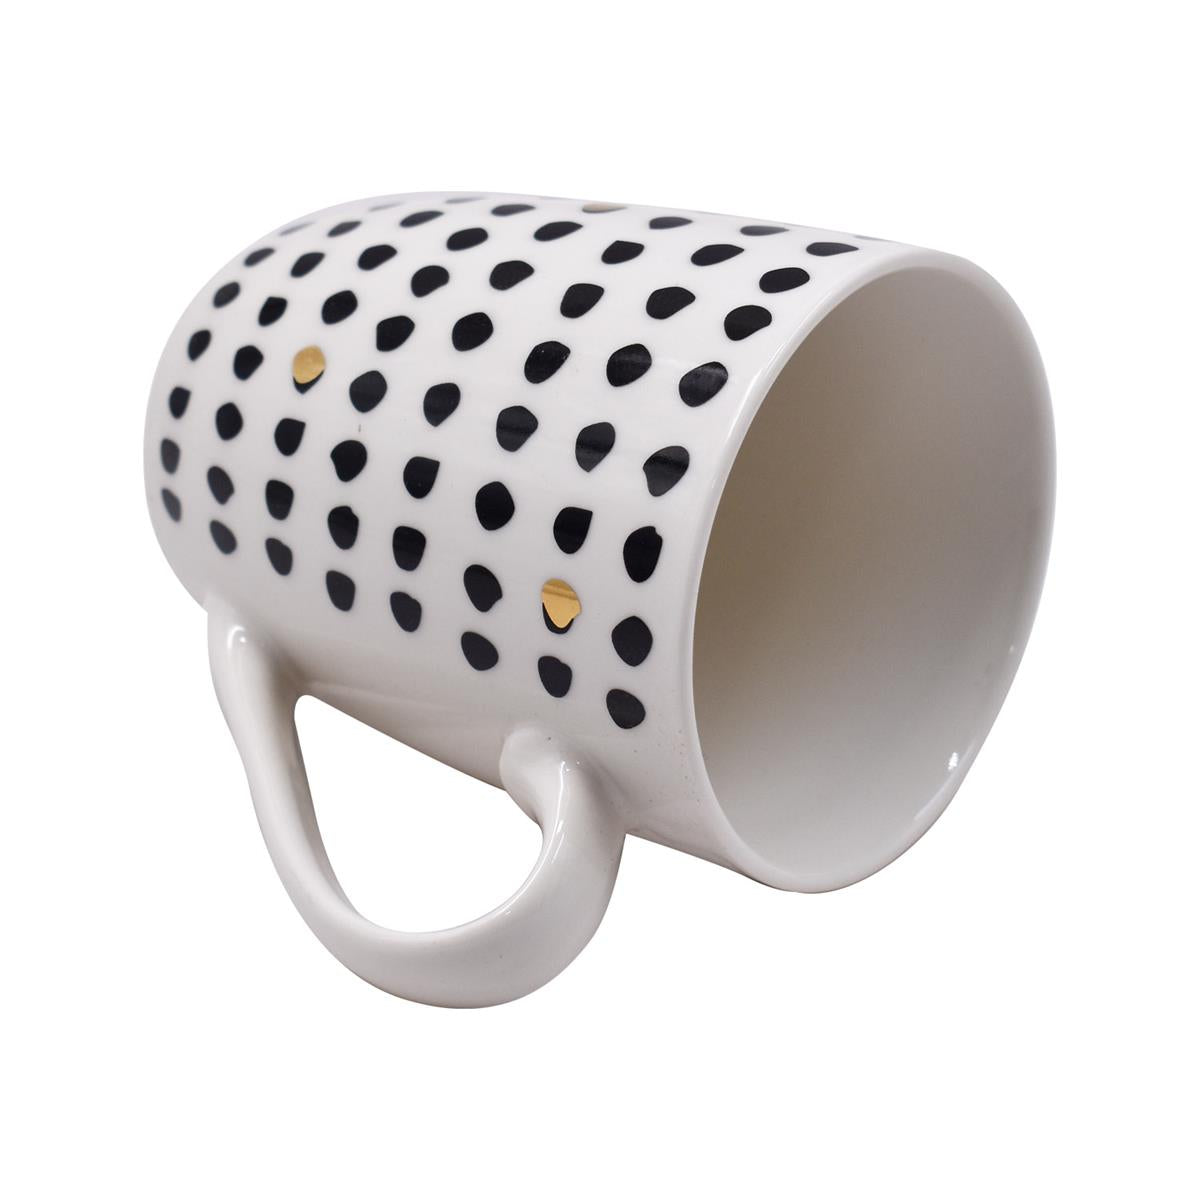 Printed Ceramic Coffee or Tea Mug with handle - 325ml (BPM4338-AA)